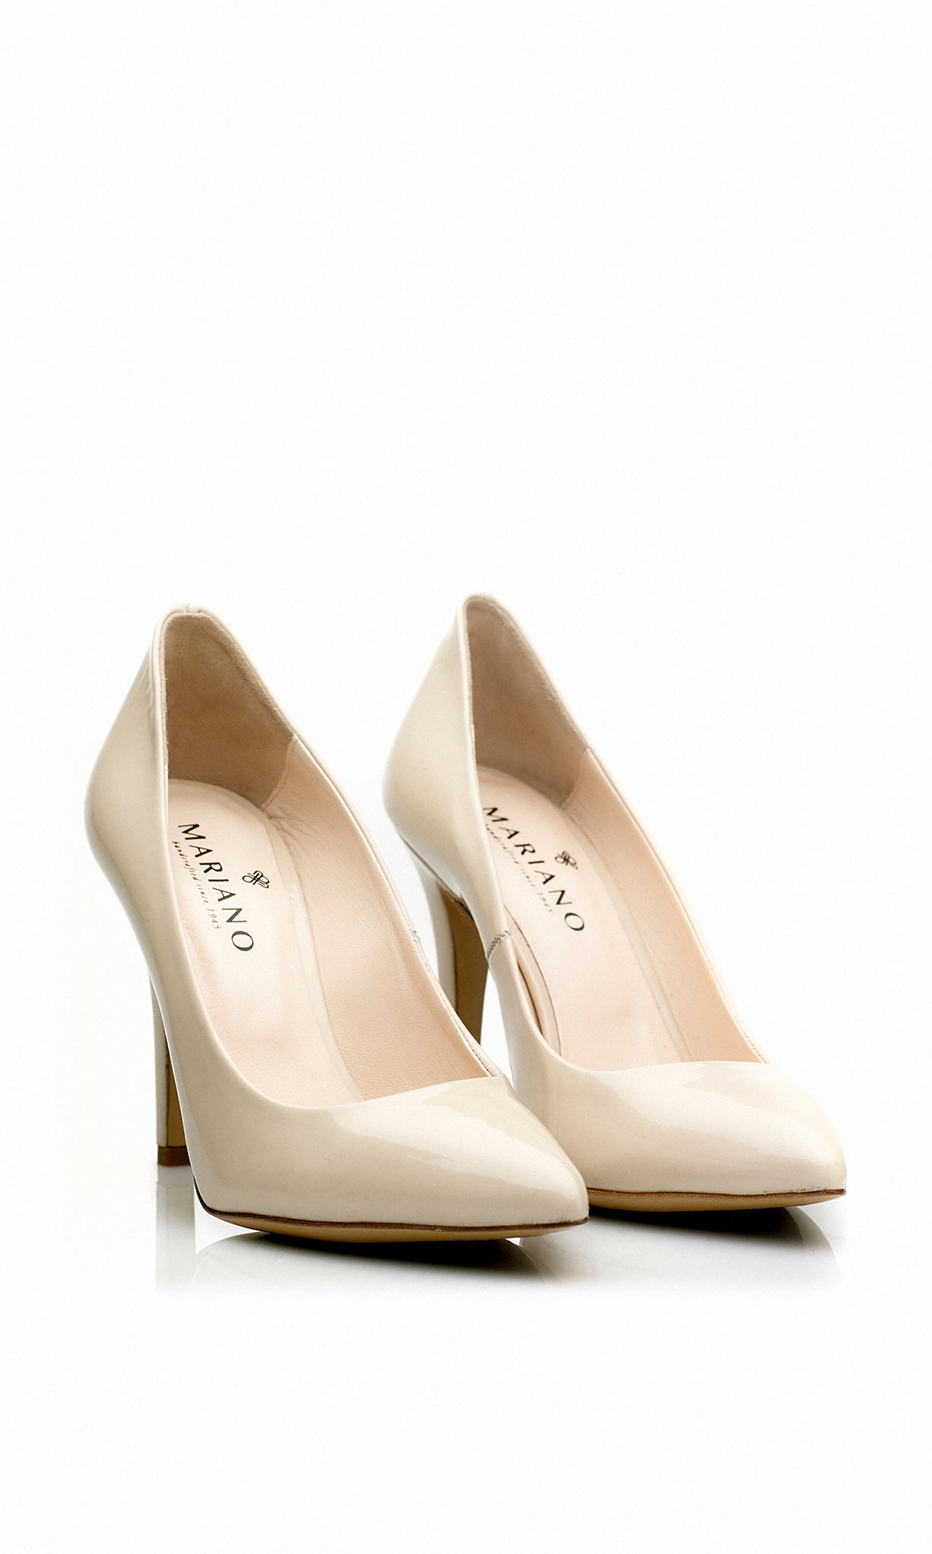 eggshell patent leather heels	